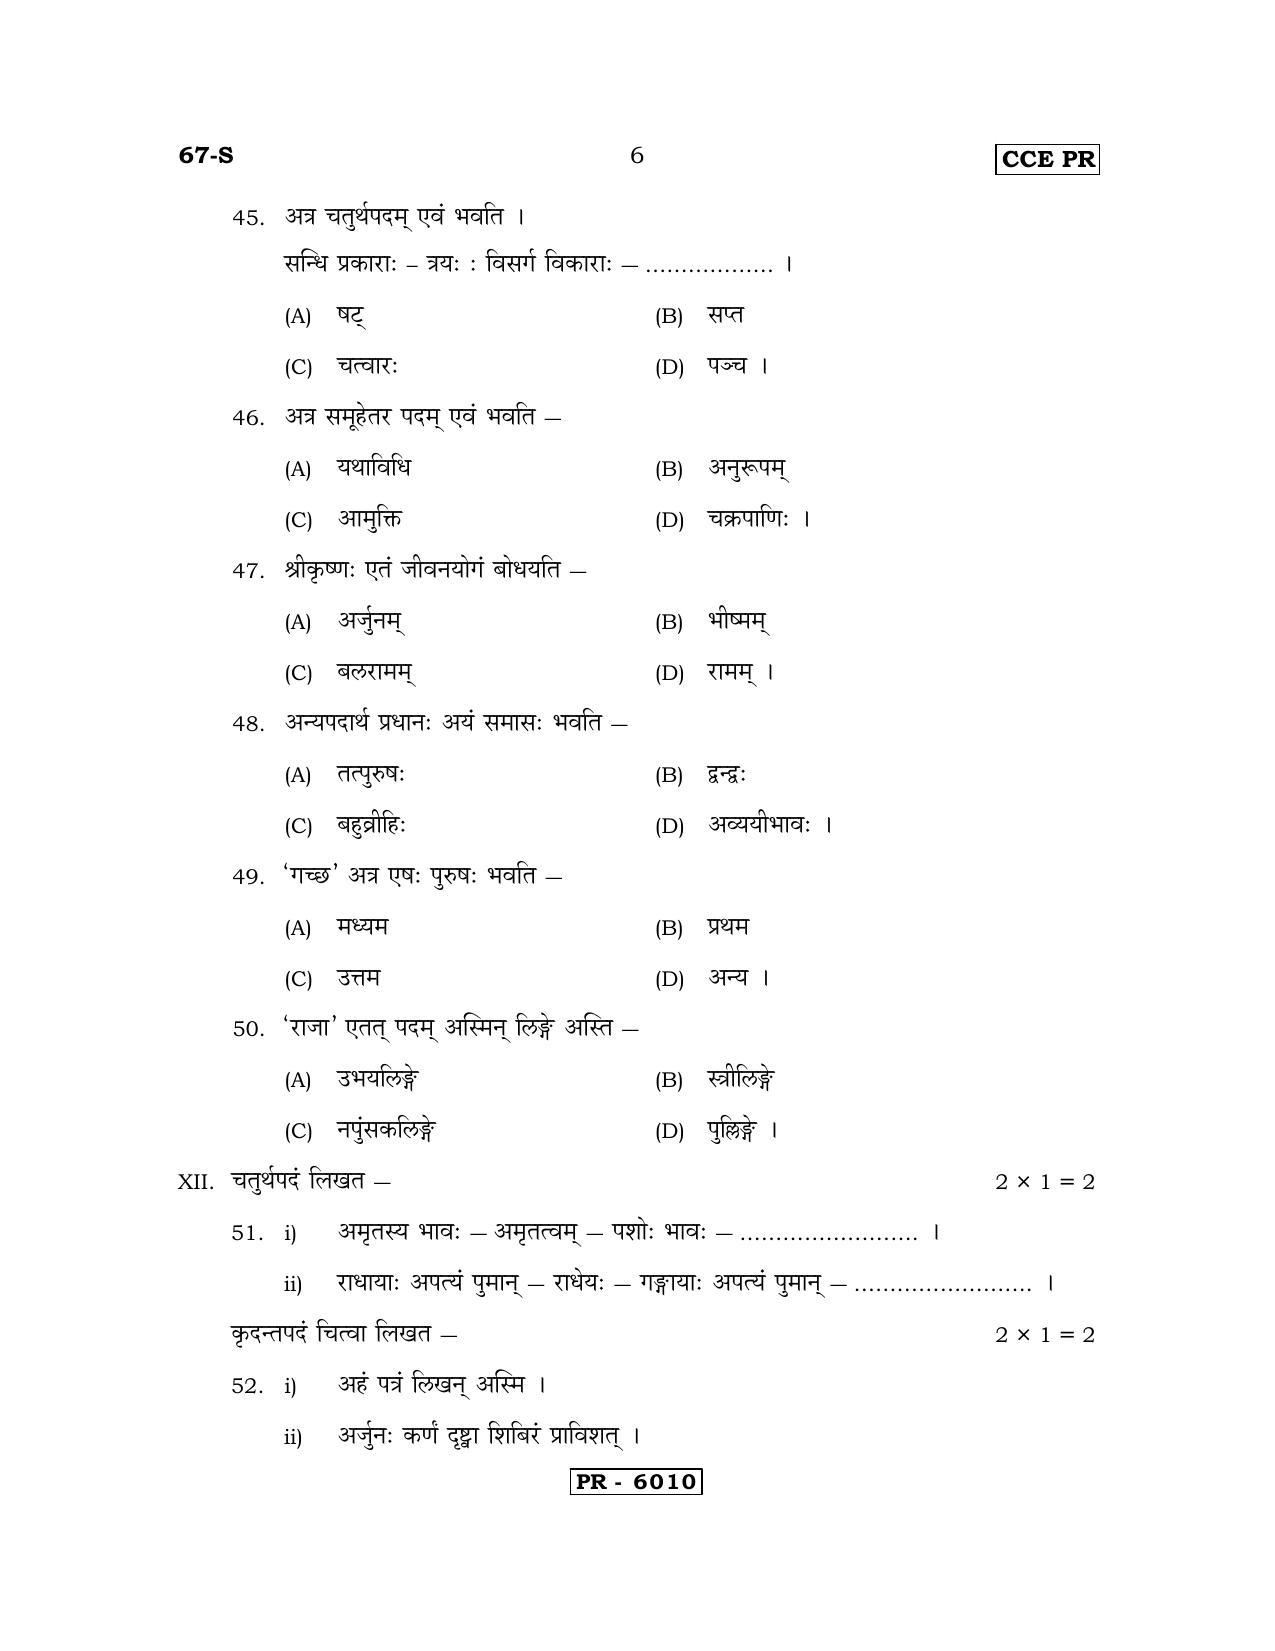 Karnataka SSLC Sanskrit - Third Language - SANSKRIT (67-S-CCE PR UNRIVISED_310) April 2018 Question Paper - Page 6